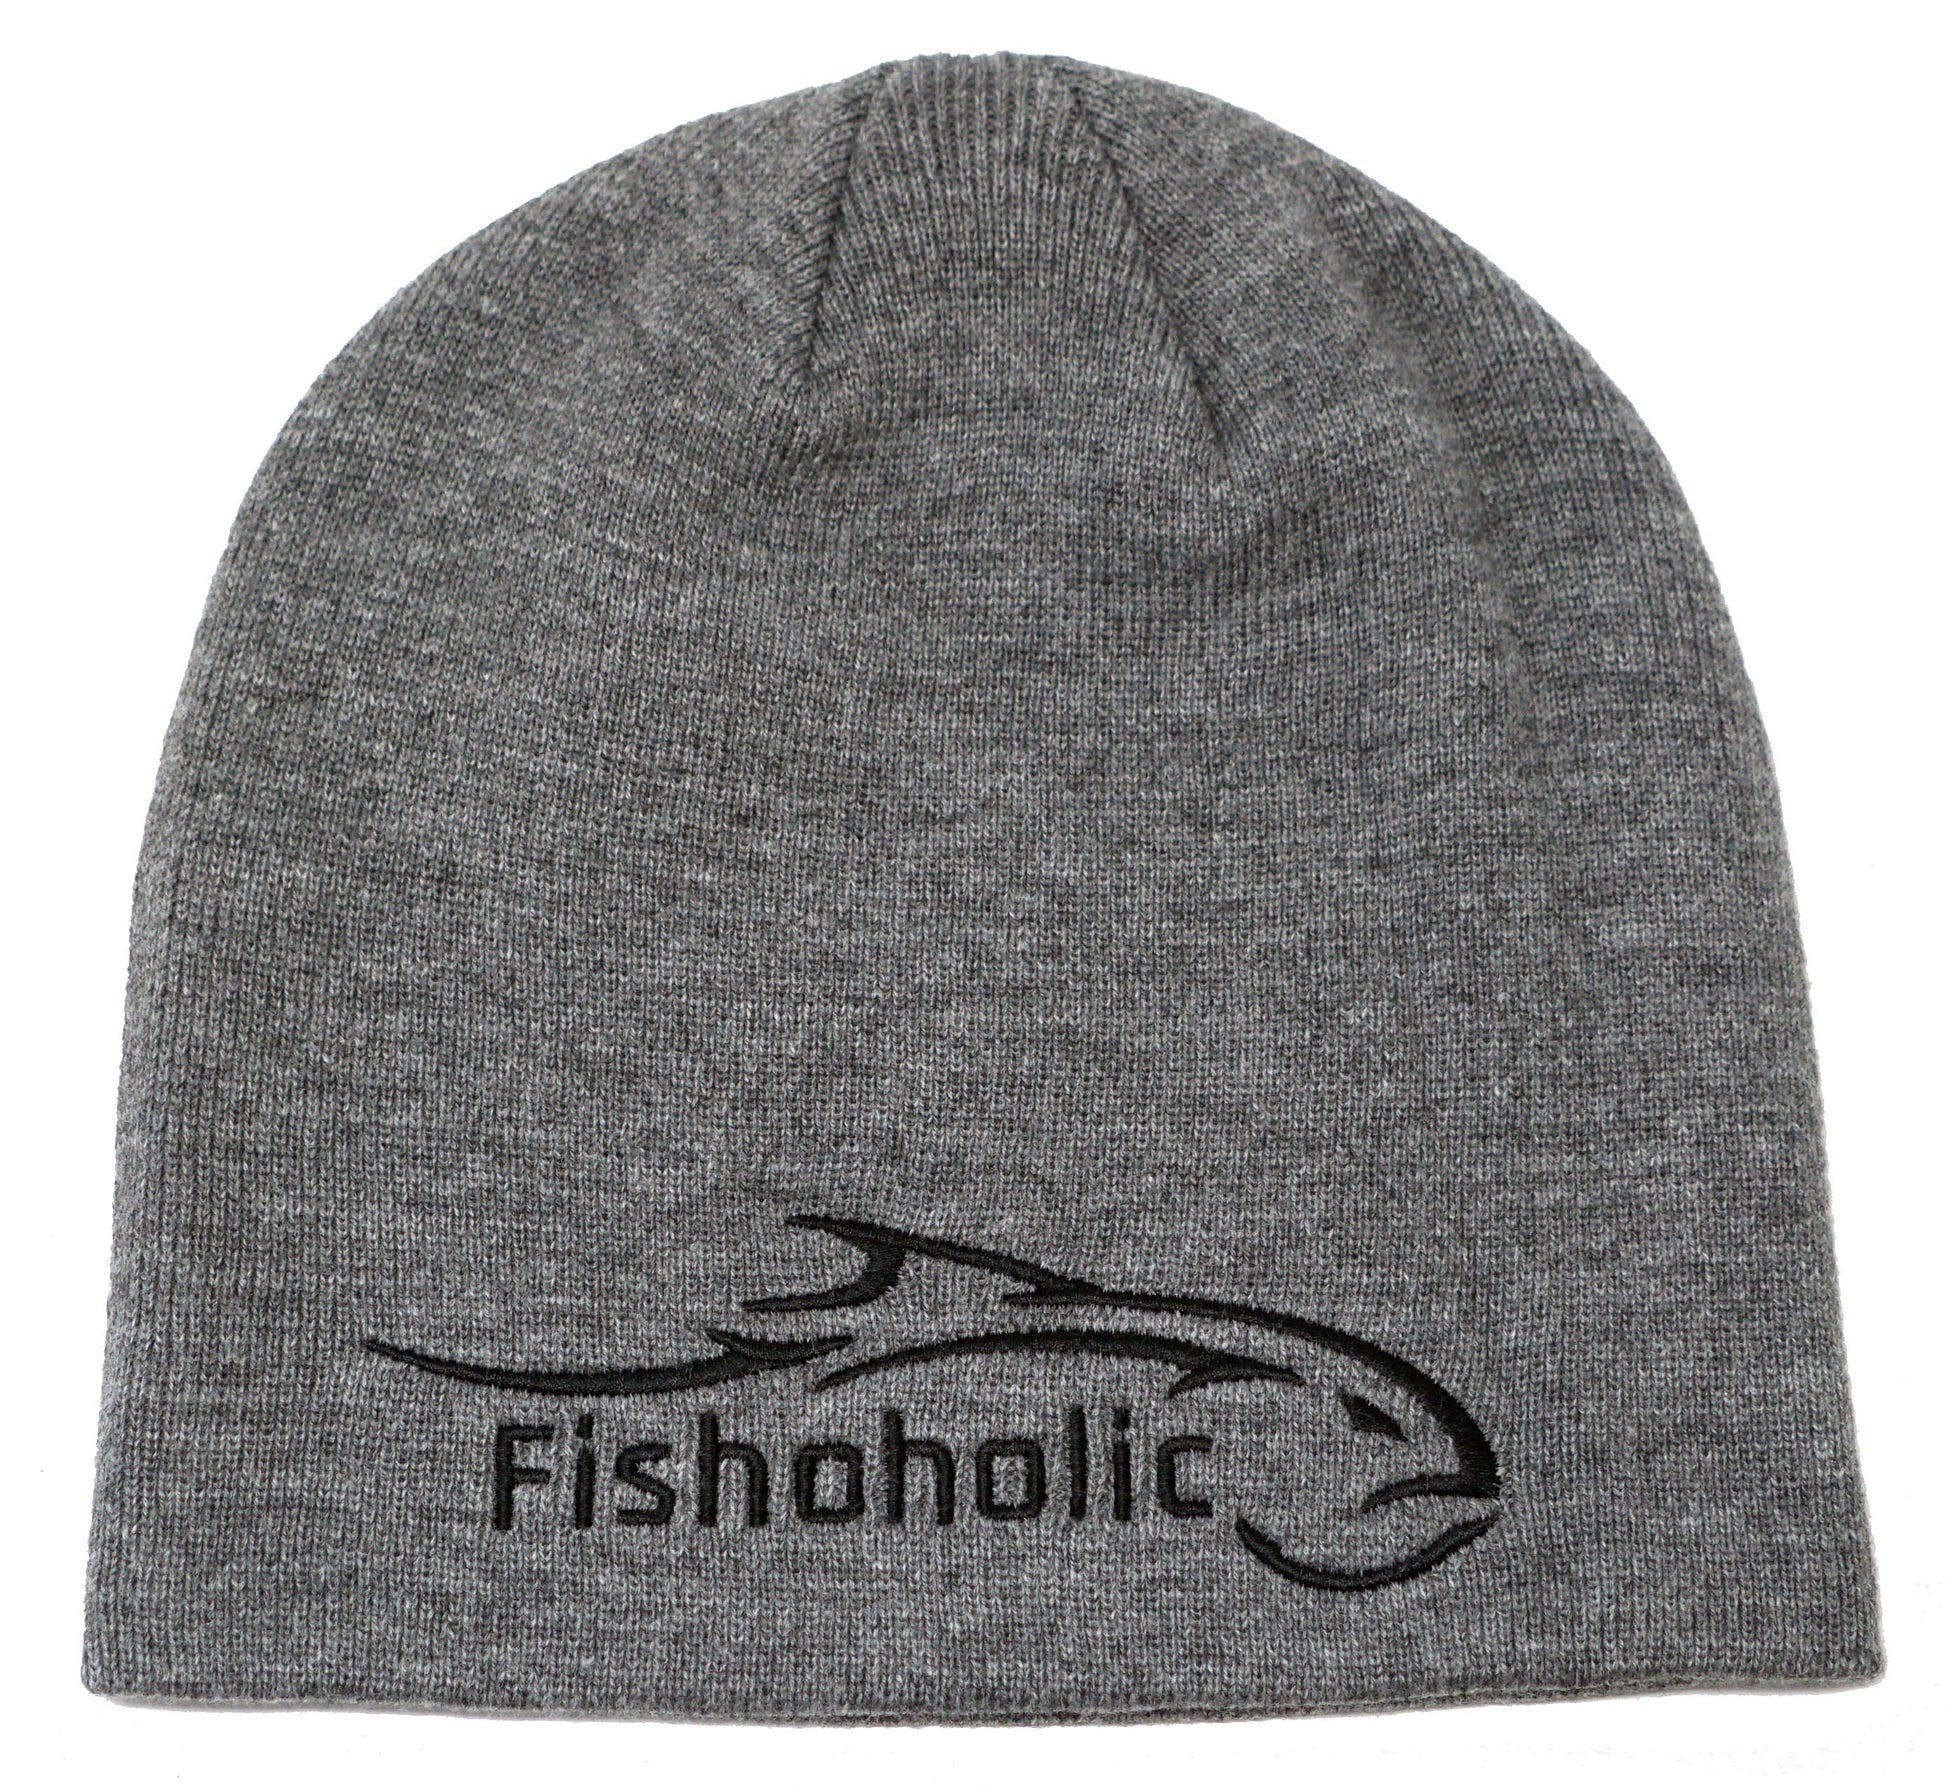 Fishoholic Fishing Skull Cap - Beanie - Watch Cap - Stocking Hat -  Embroidered Logo